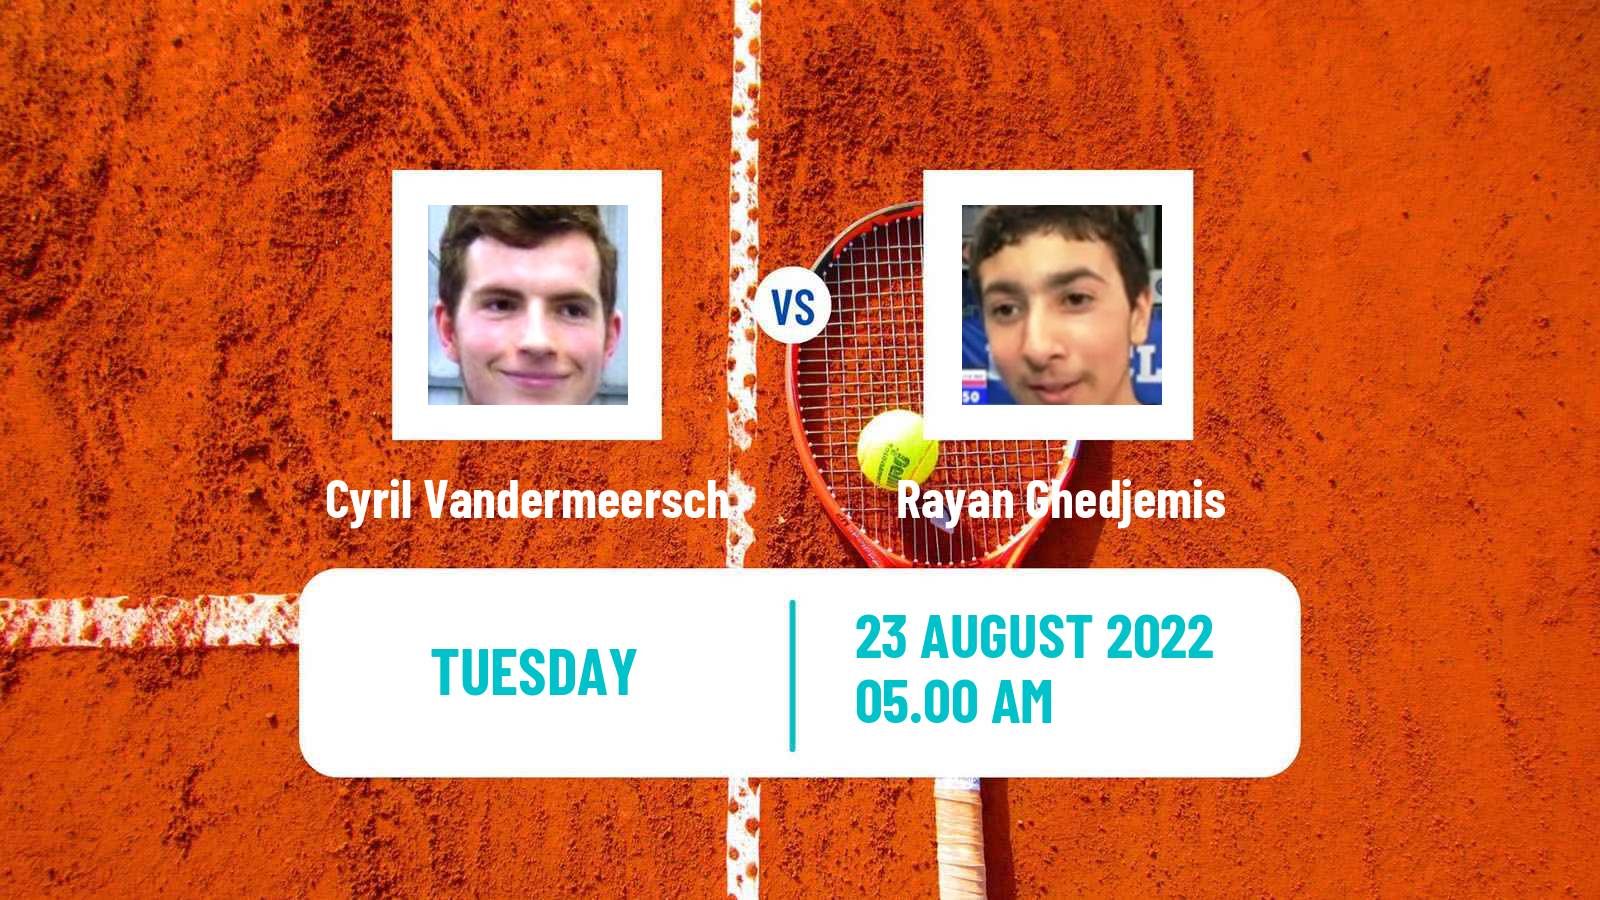 Tennis ITF Tournaments Cyril Vandermeersch - Rayan Ghedjemis